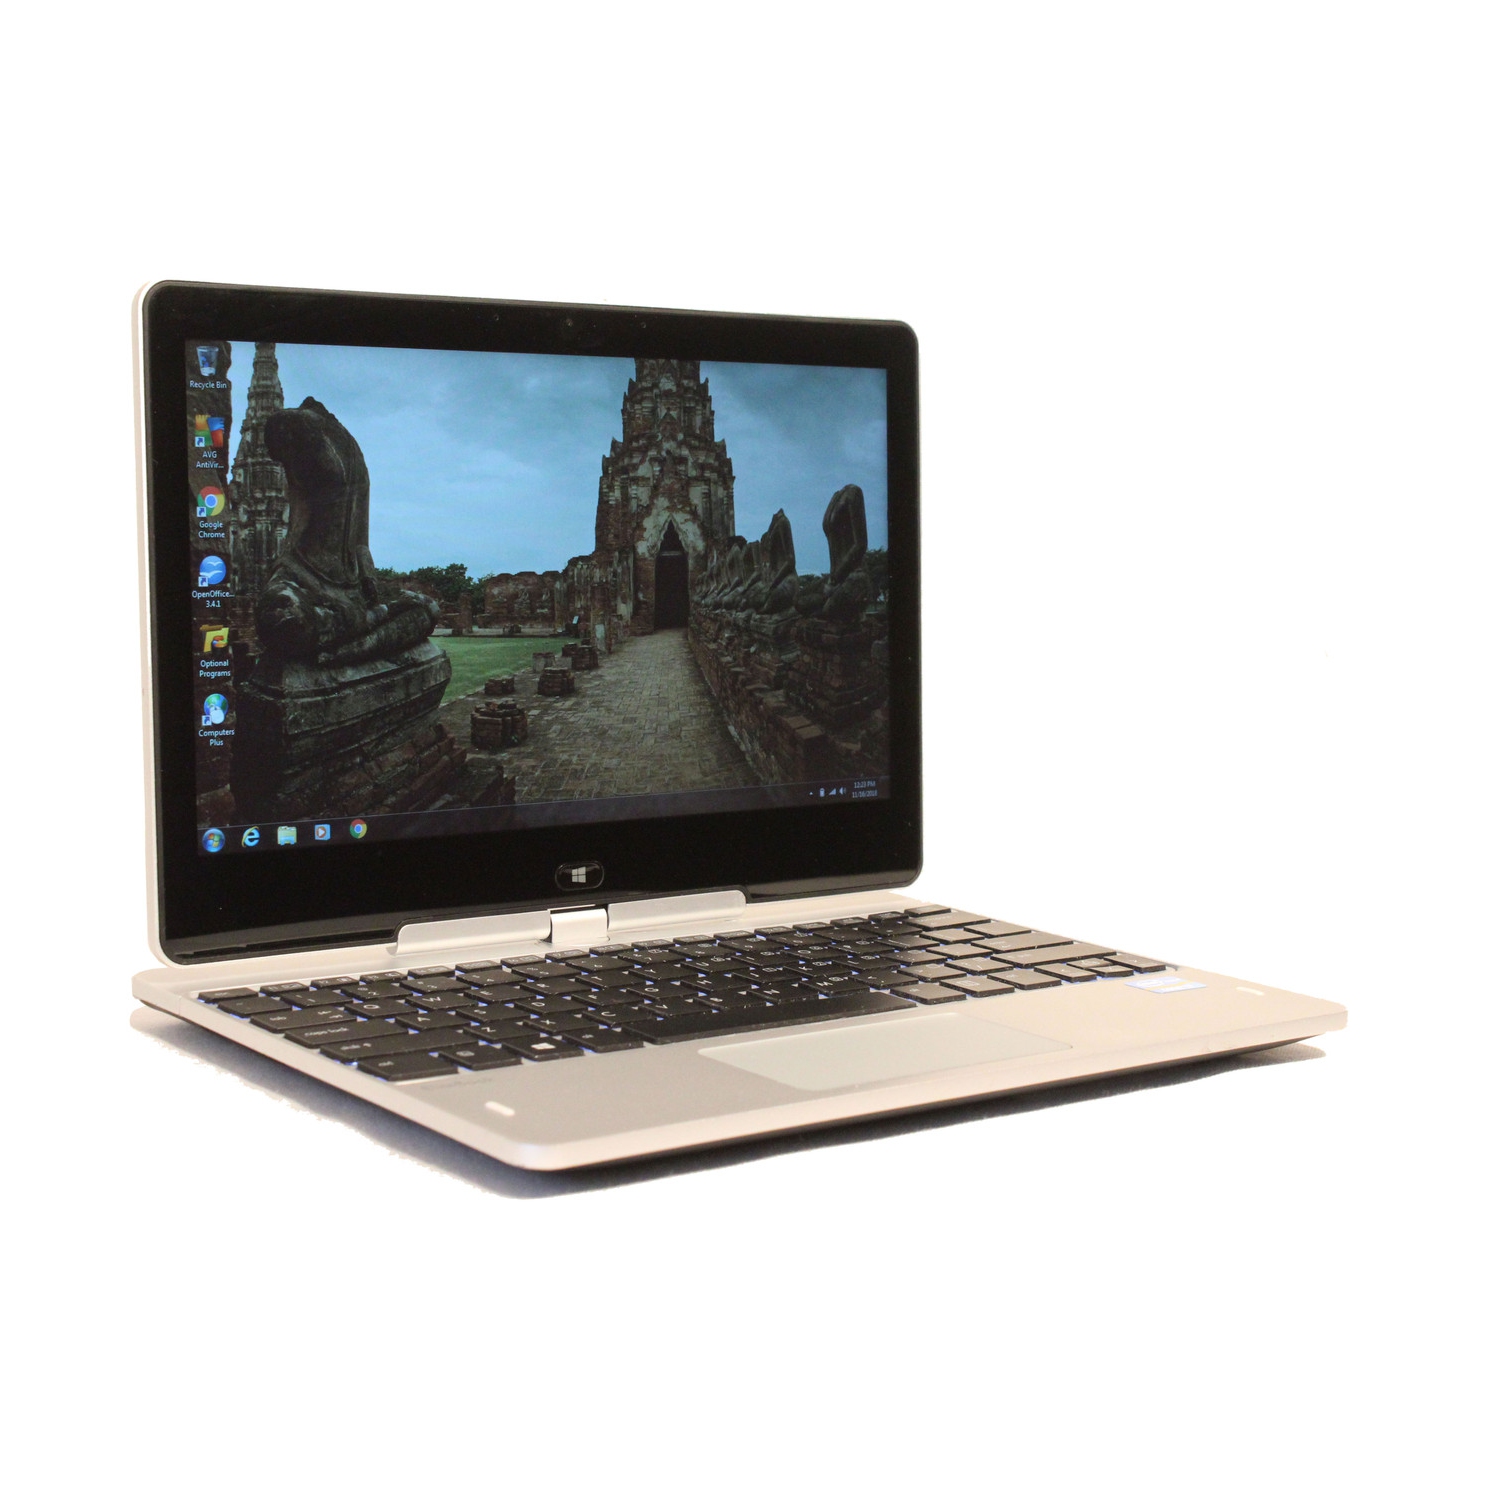 HP Elitebook Revolve 810 G3, 11.6" Convertible Laptop/Tablet, Core i5 5th Gen (2.3Ghz), 8Gb RAM, 256Gb SSD, Windows 10 (Refurbished)